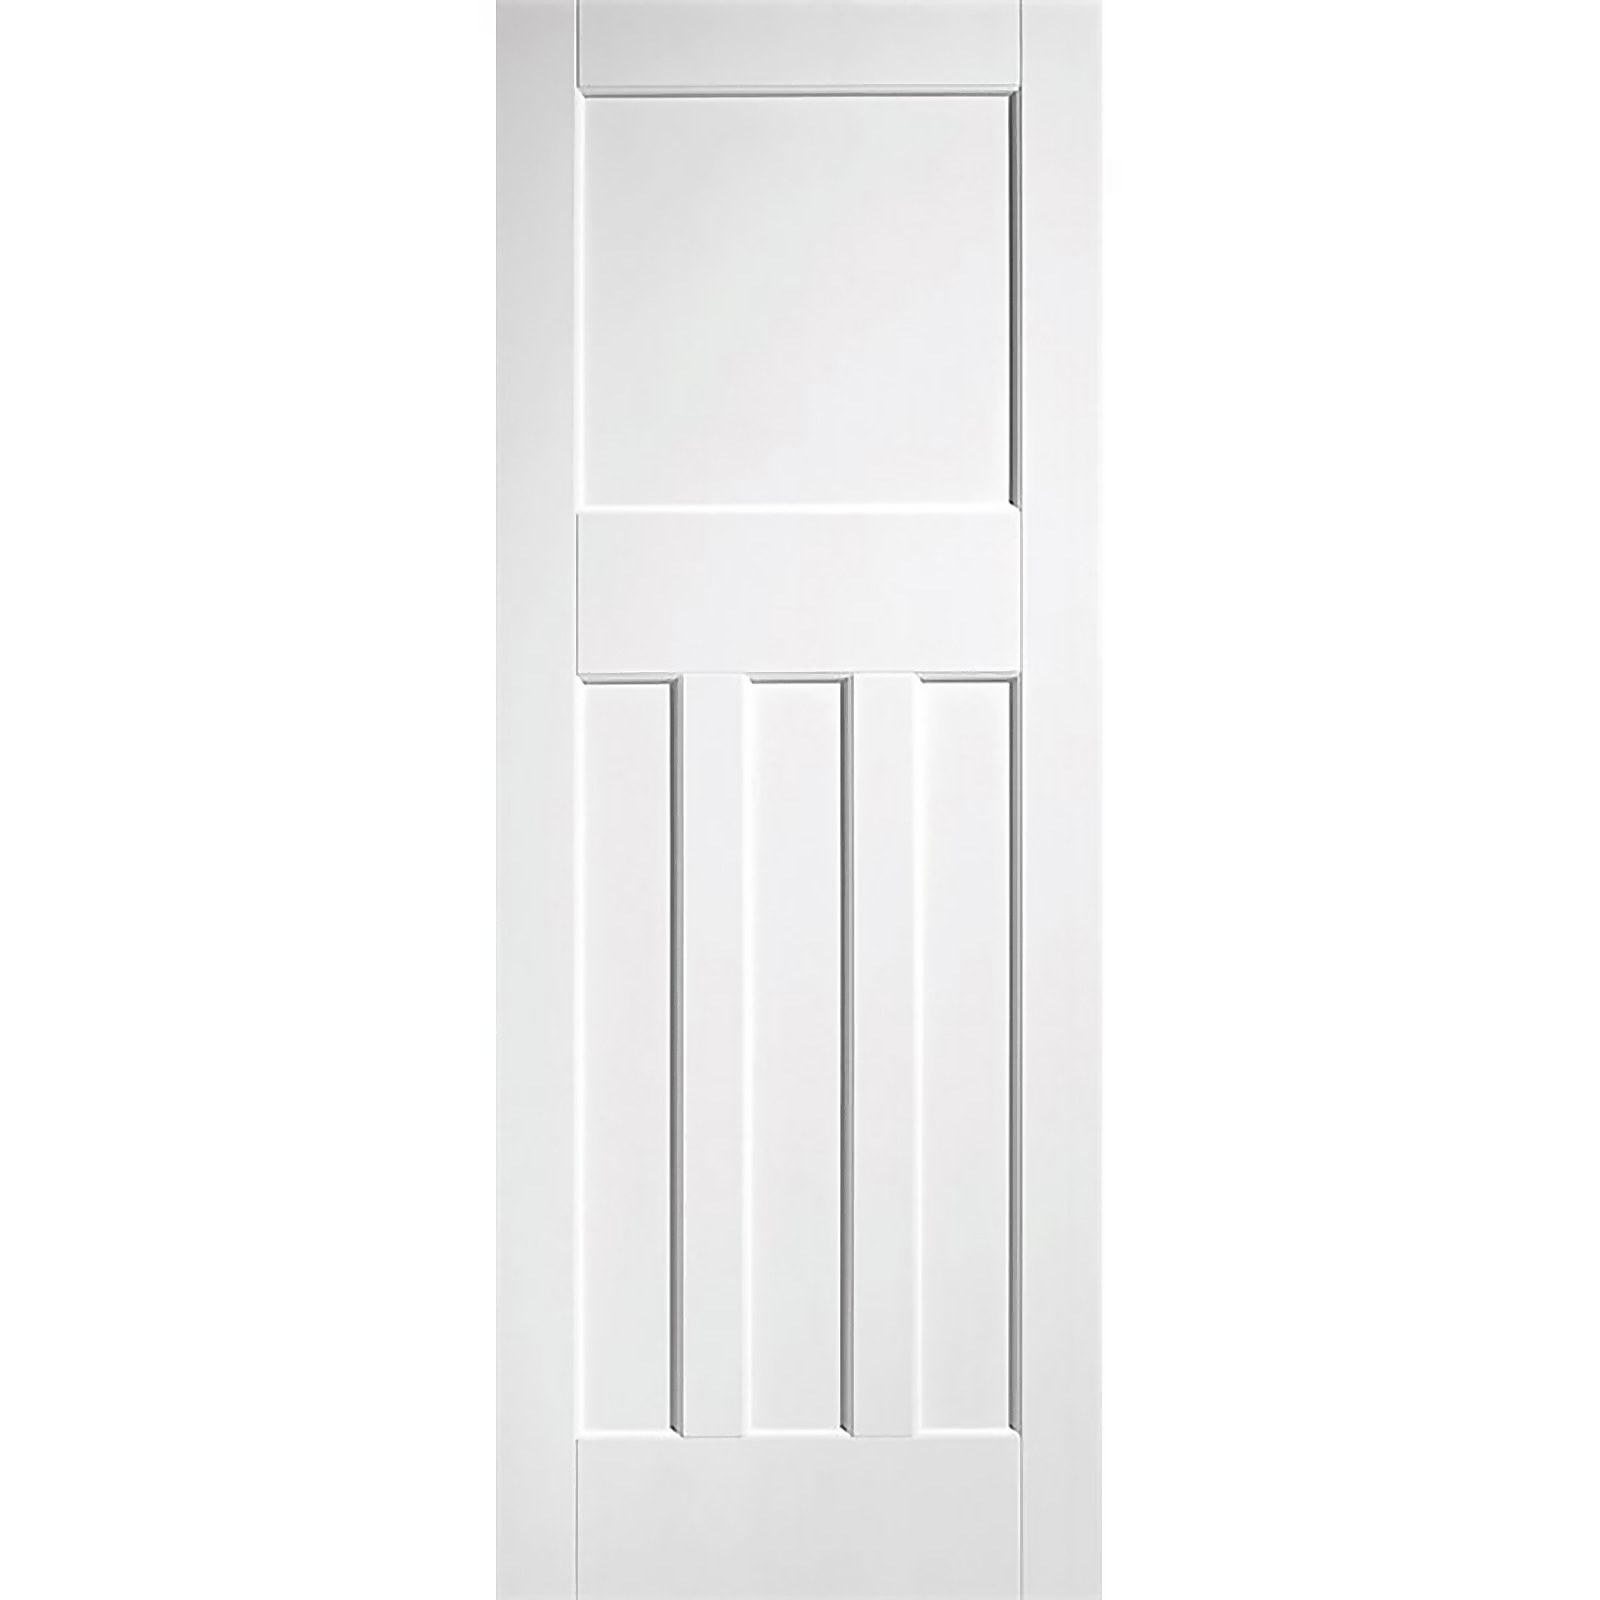 30's Style - White Primed Internal Fire Door - 1981 x 838 x 44mm